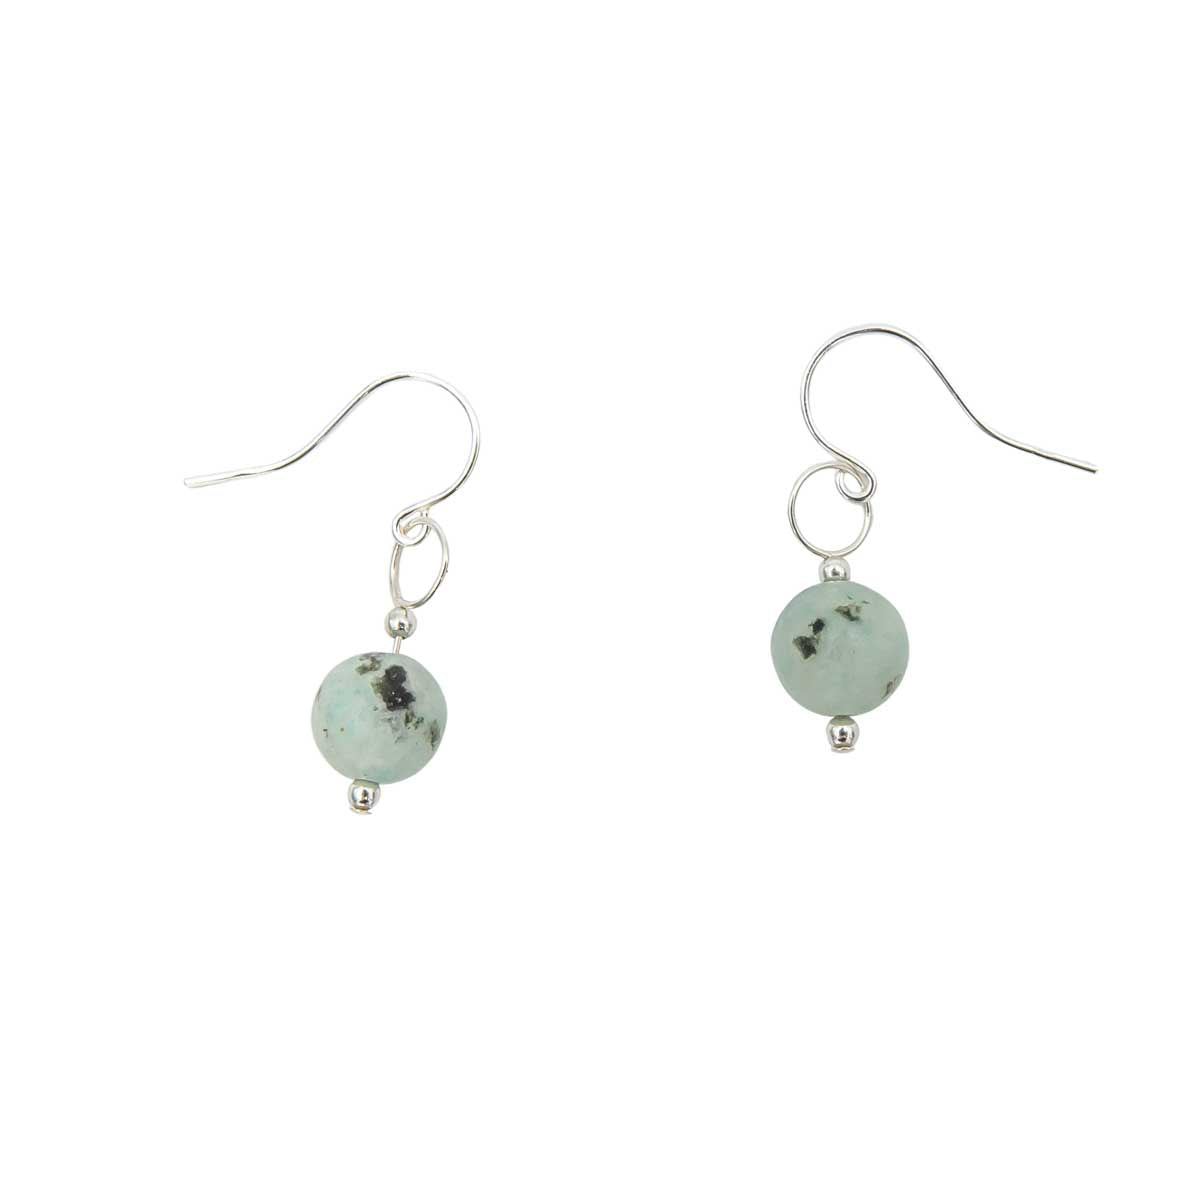 Handmade Petite Kiwi Jasper | Sterling Silver Earrings | Eco-Friendly Jewelry | Hypoallergenic & Nickel-Free | Natural Stone